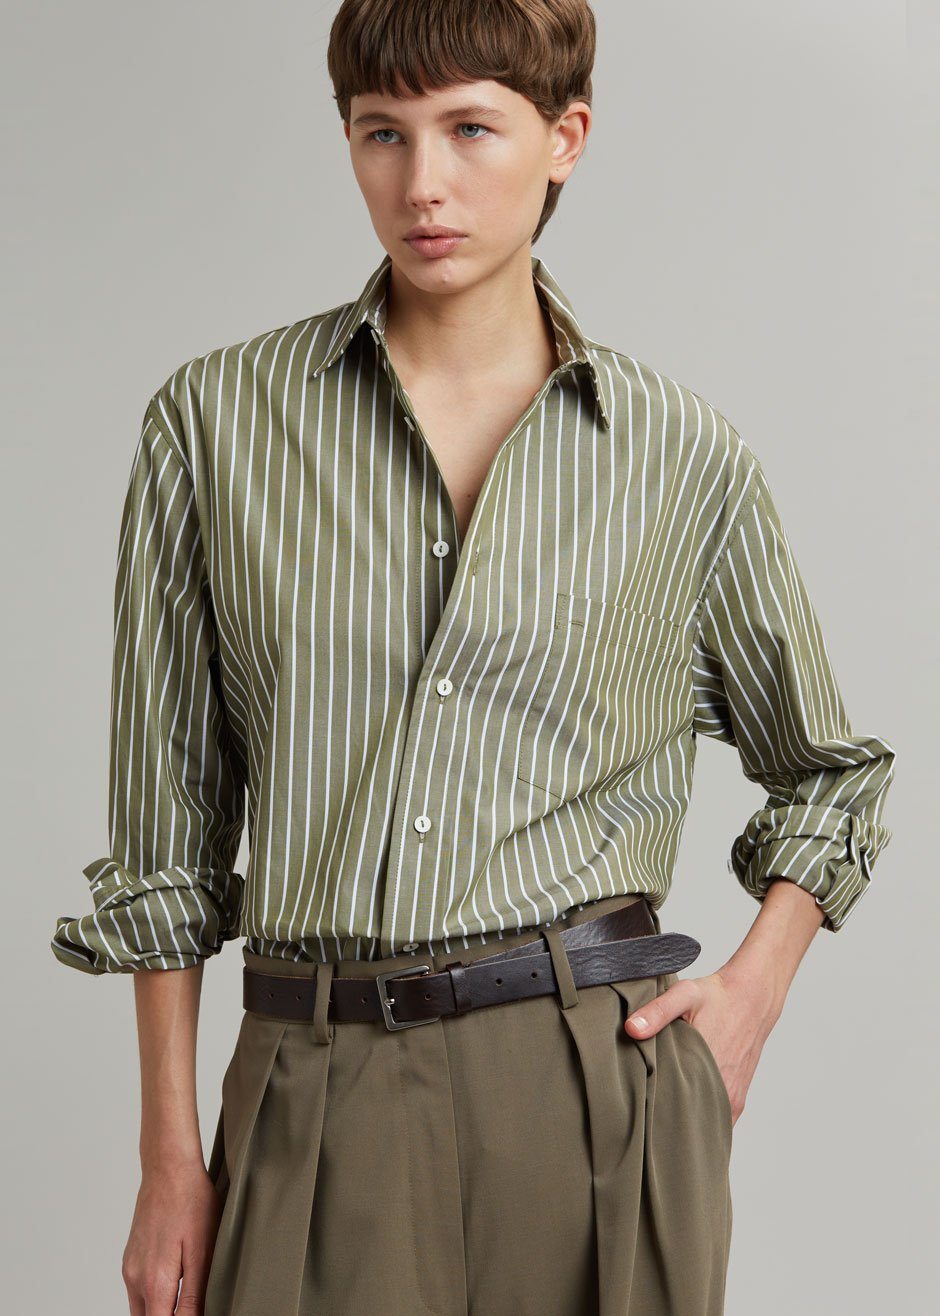 Matteau Classic Stripe Shirt - Olive